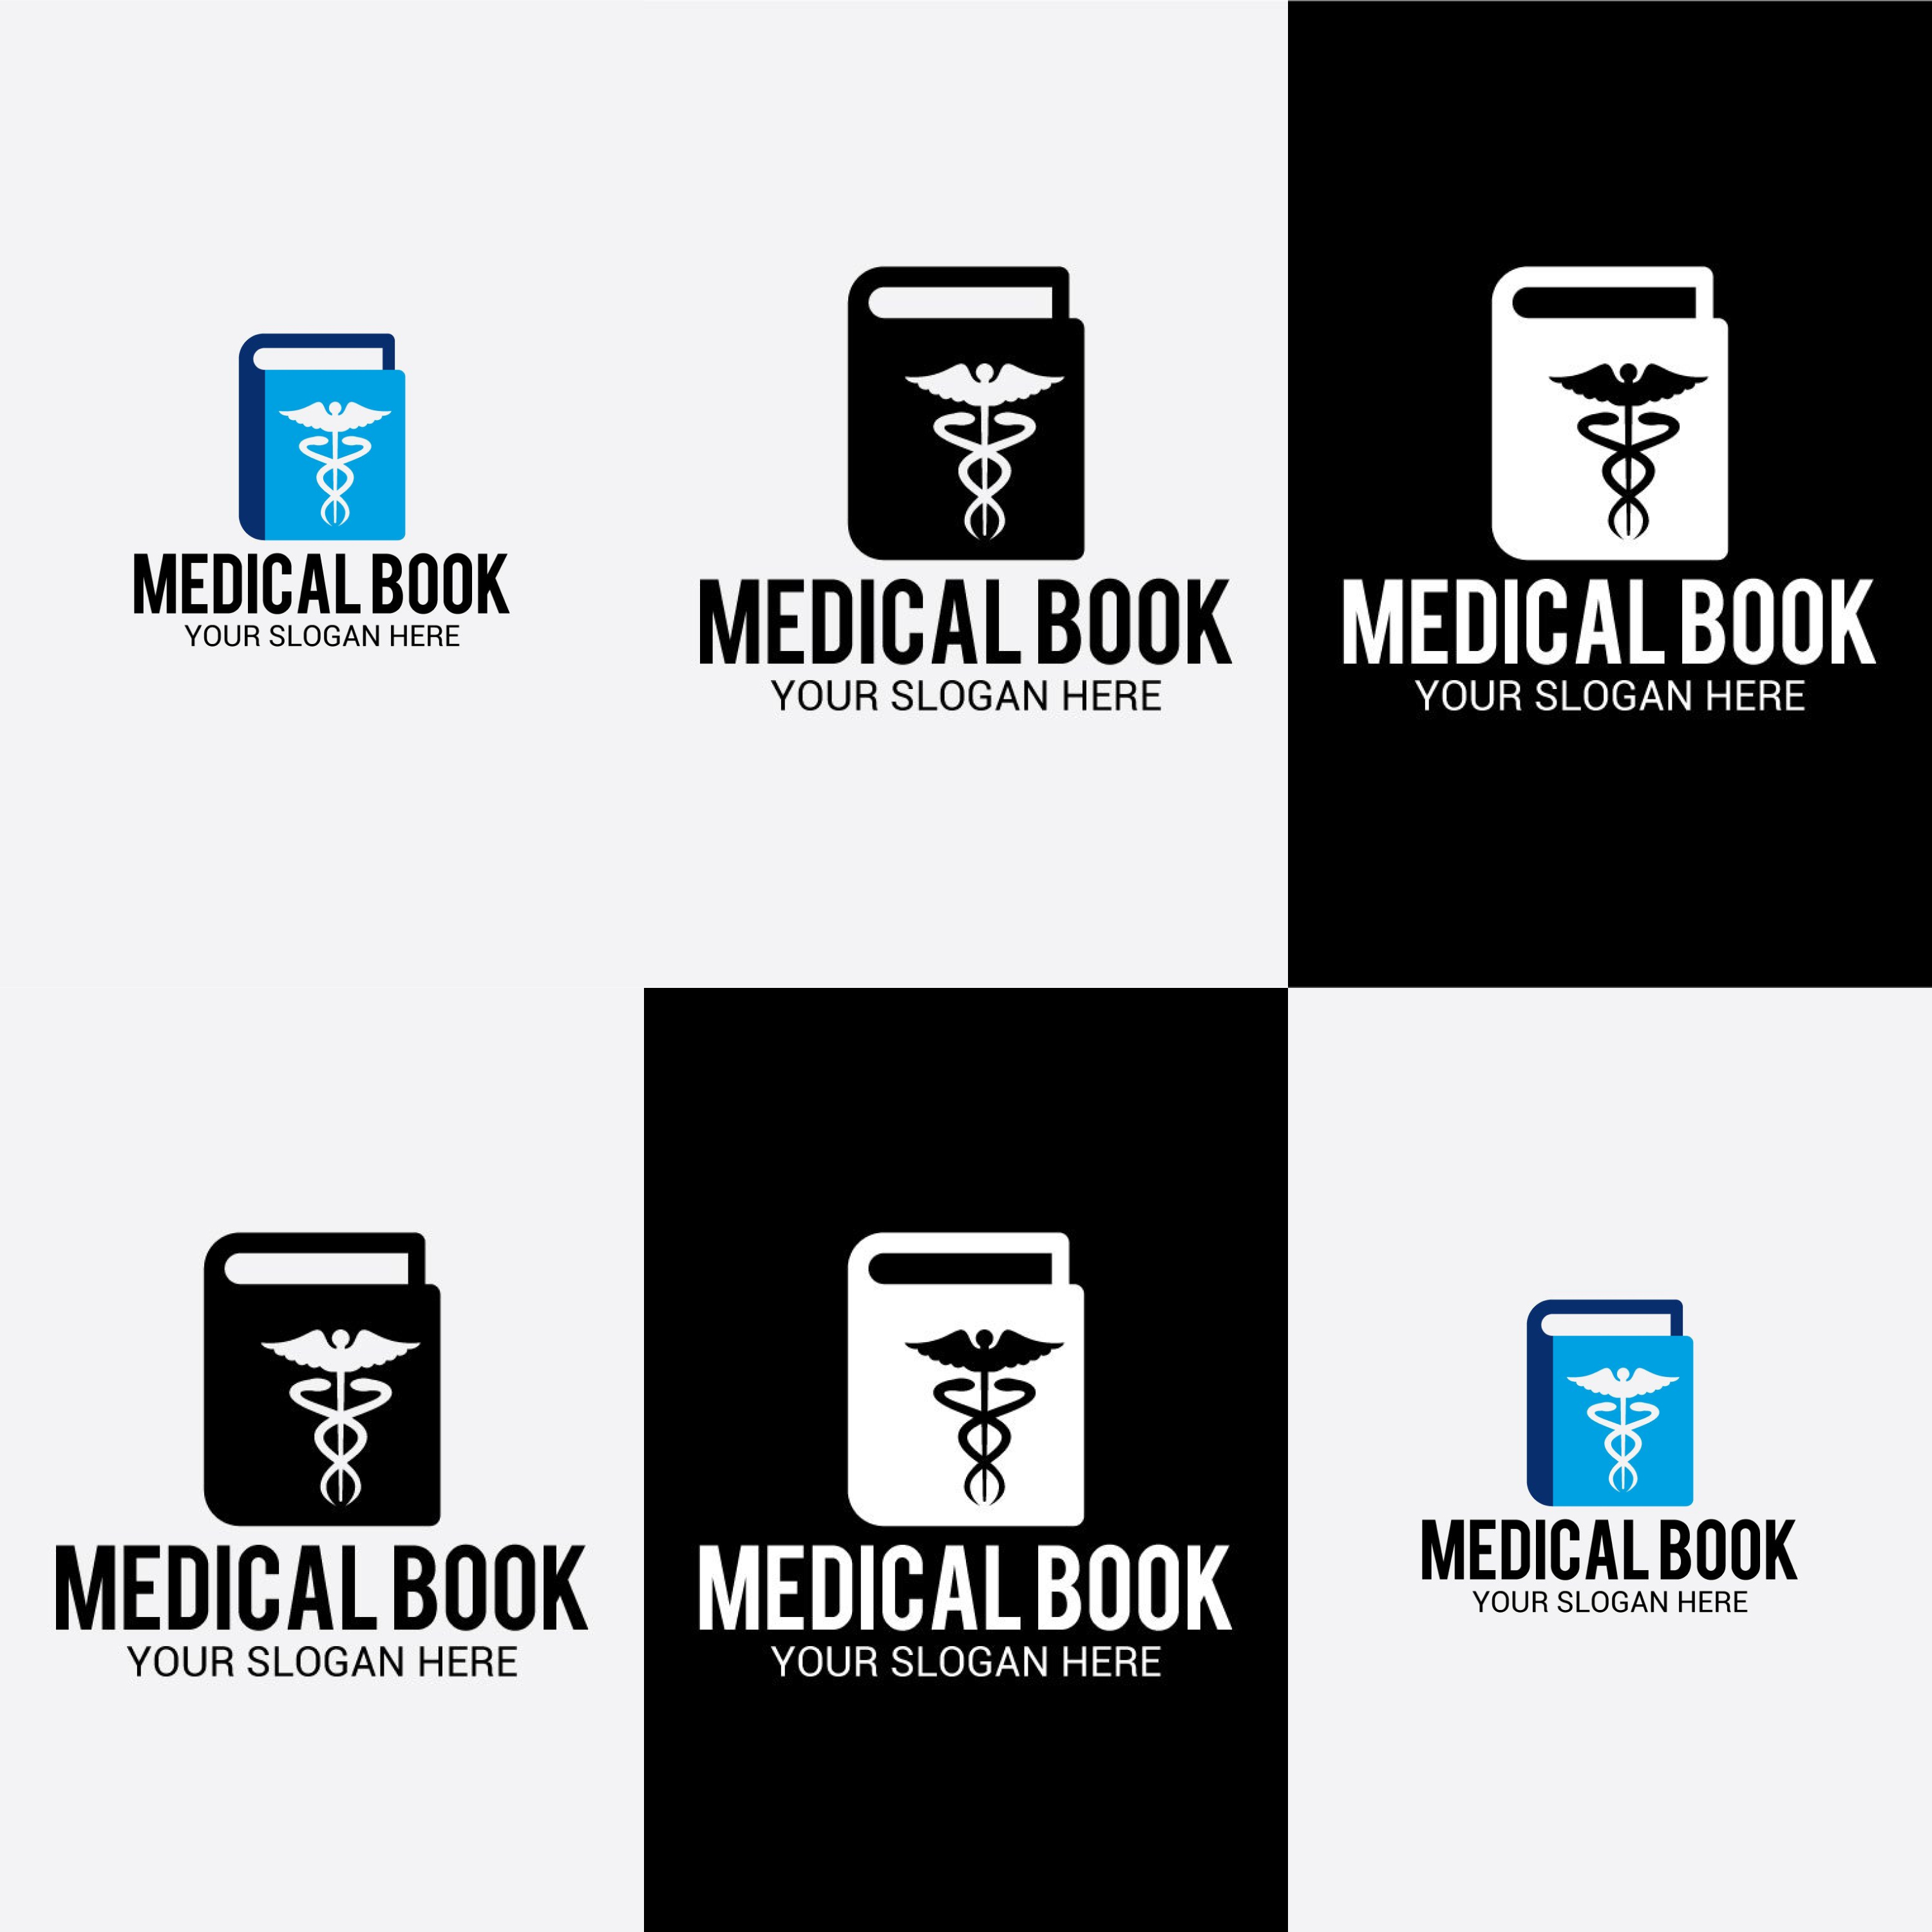 MEDICAL BOOK LOGO cover.